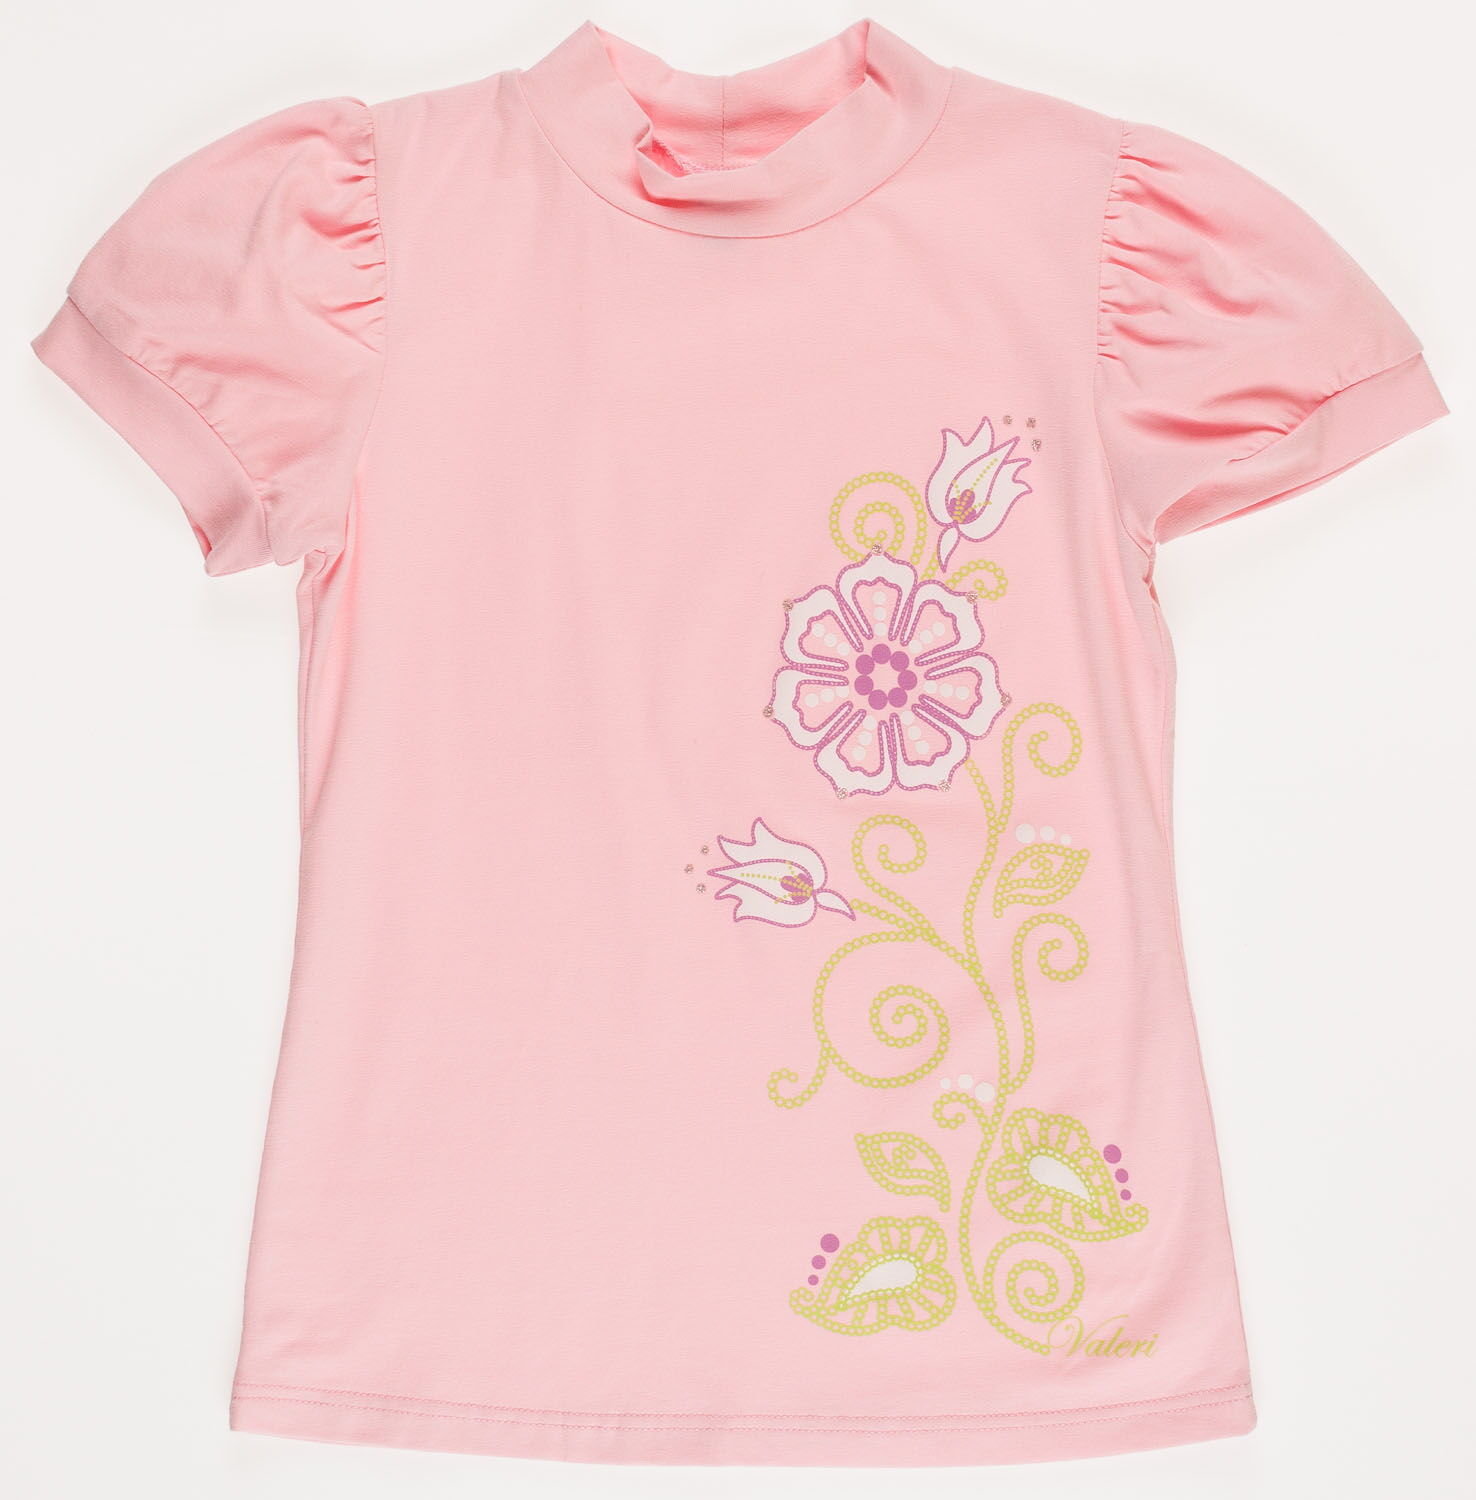 Блузка трикотажная с коротким рукавом Valeri tex Цветок розовая 1711-55-242 - цена